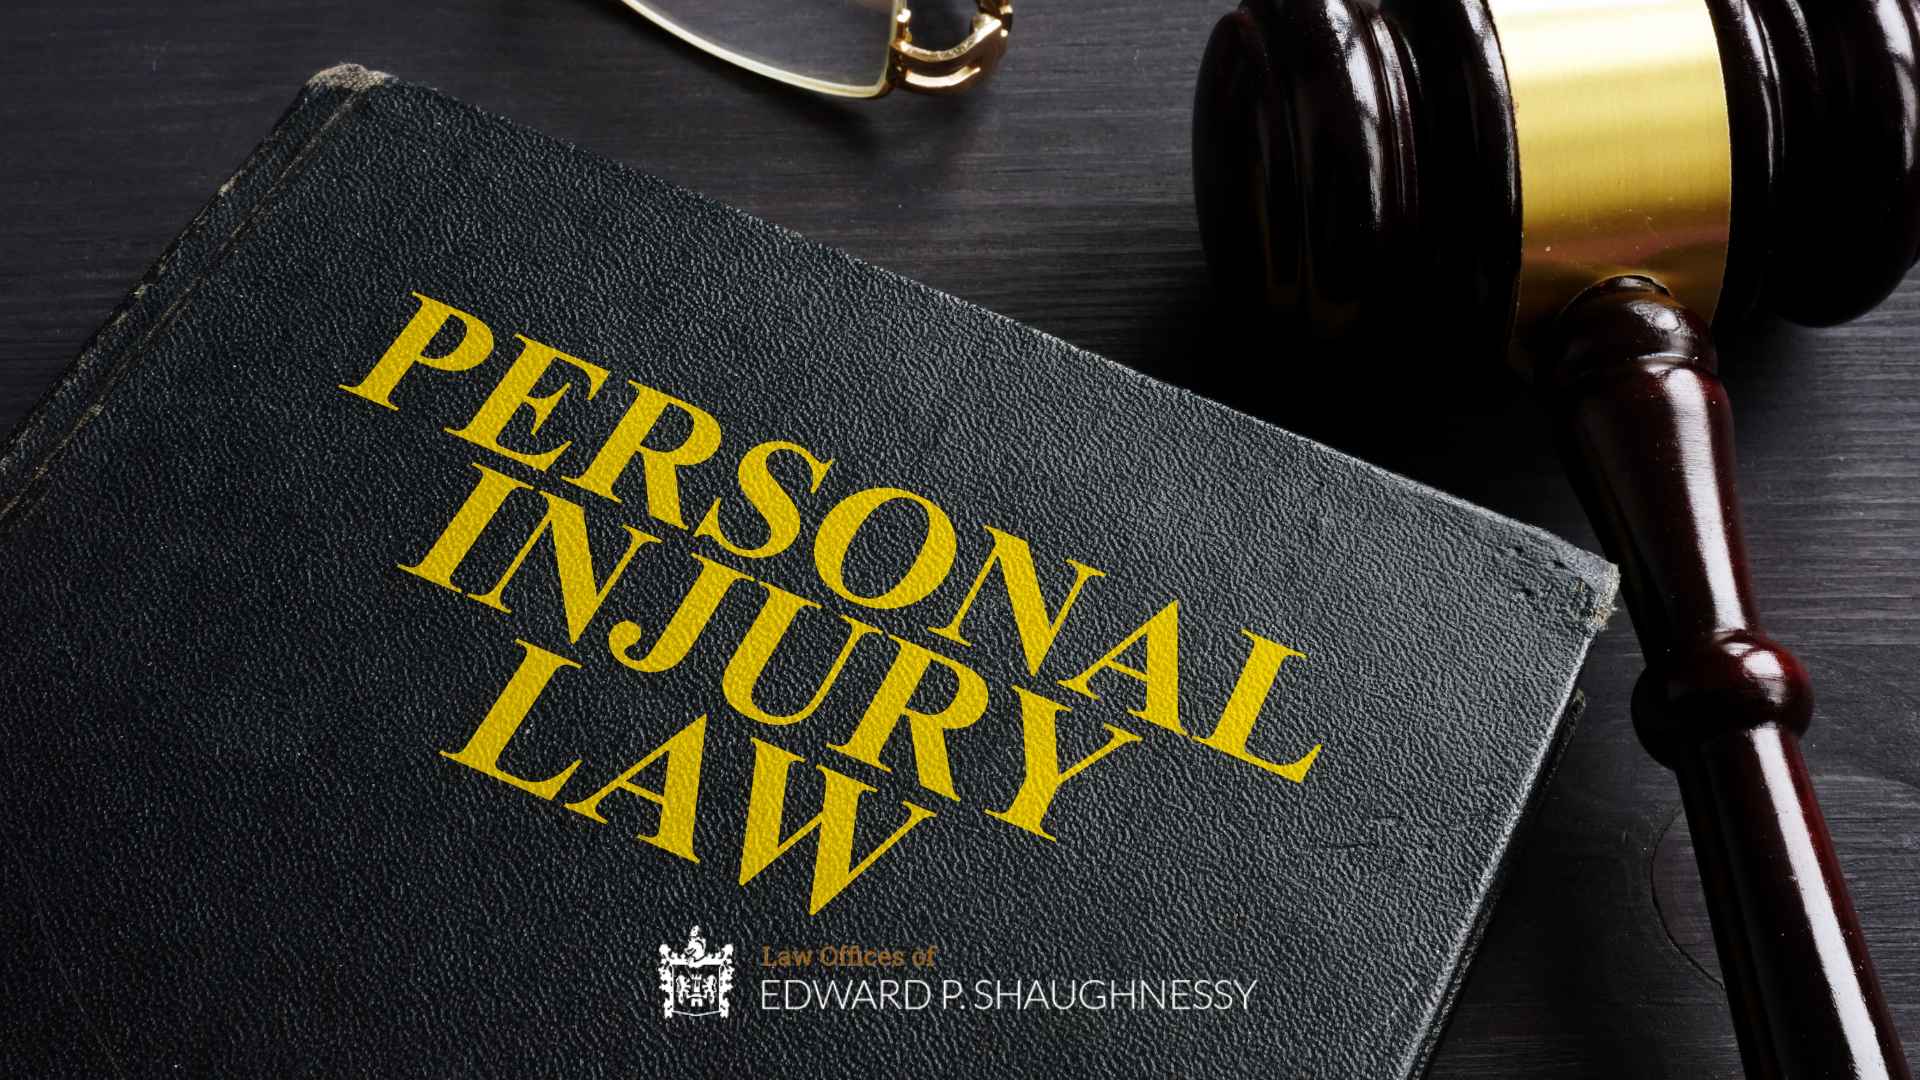 Easton Personal Injury Lawyer